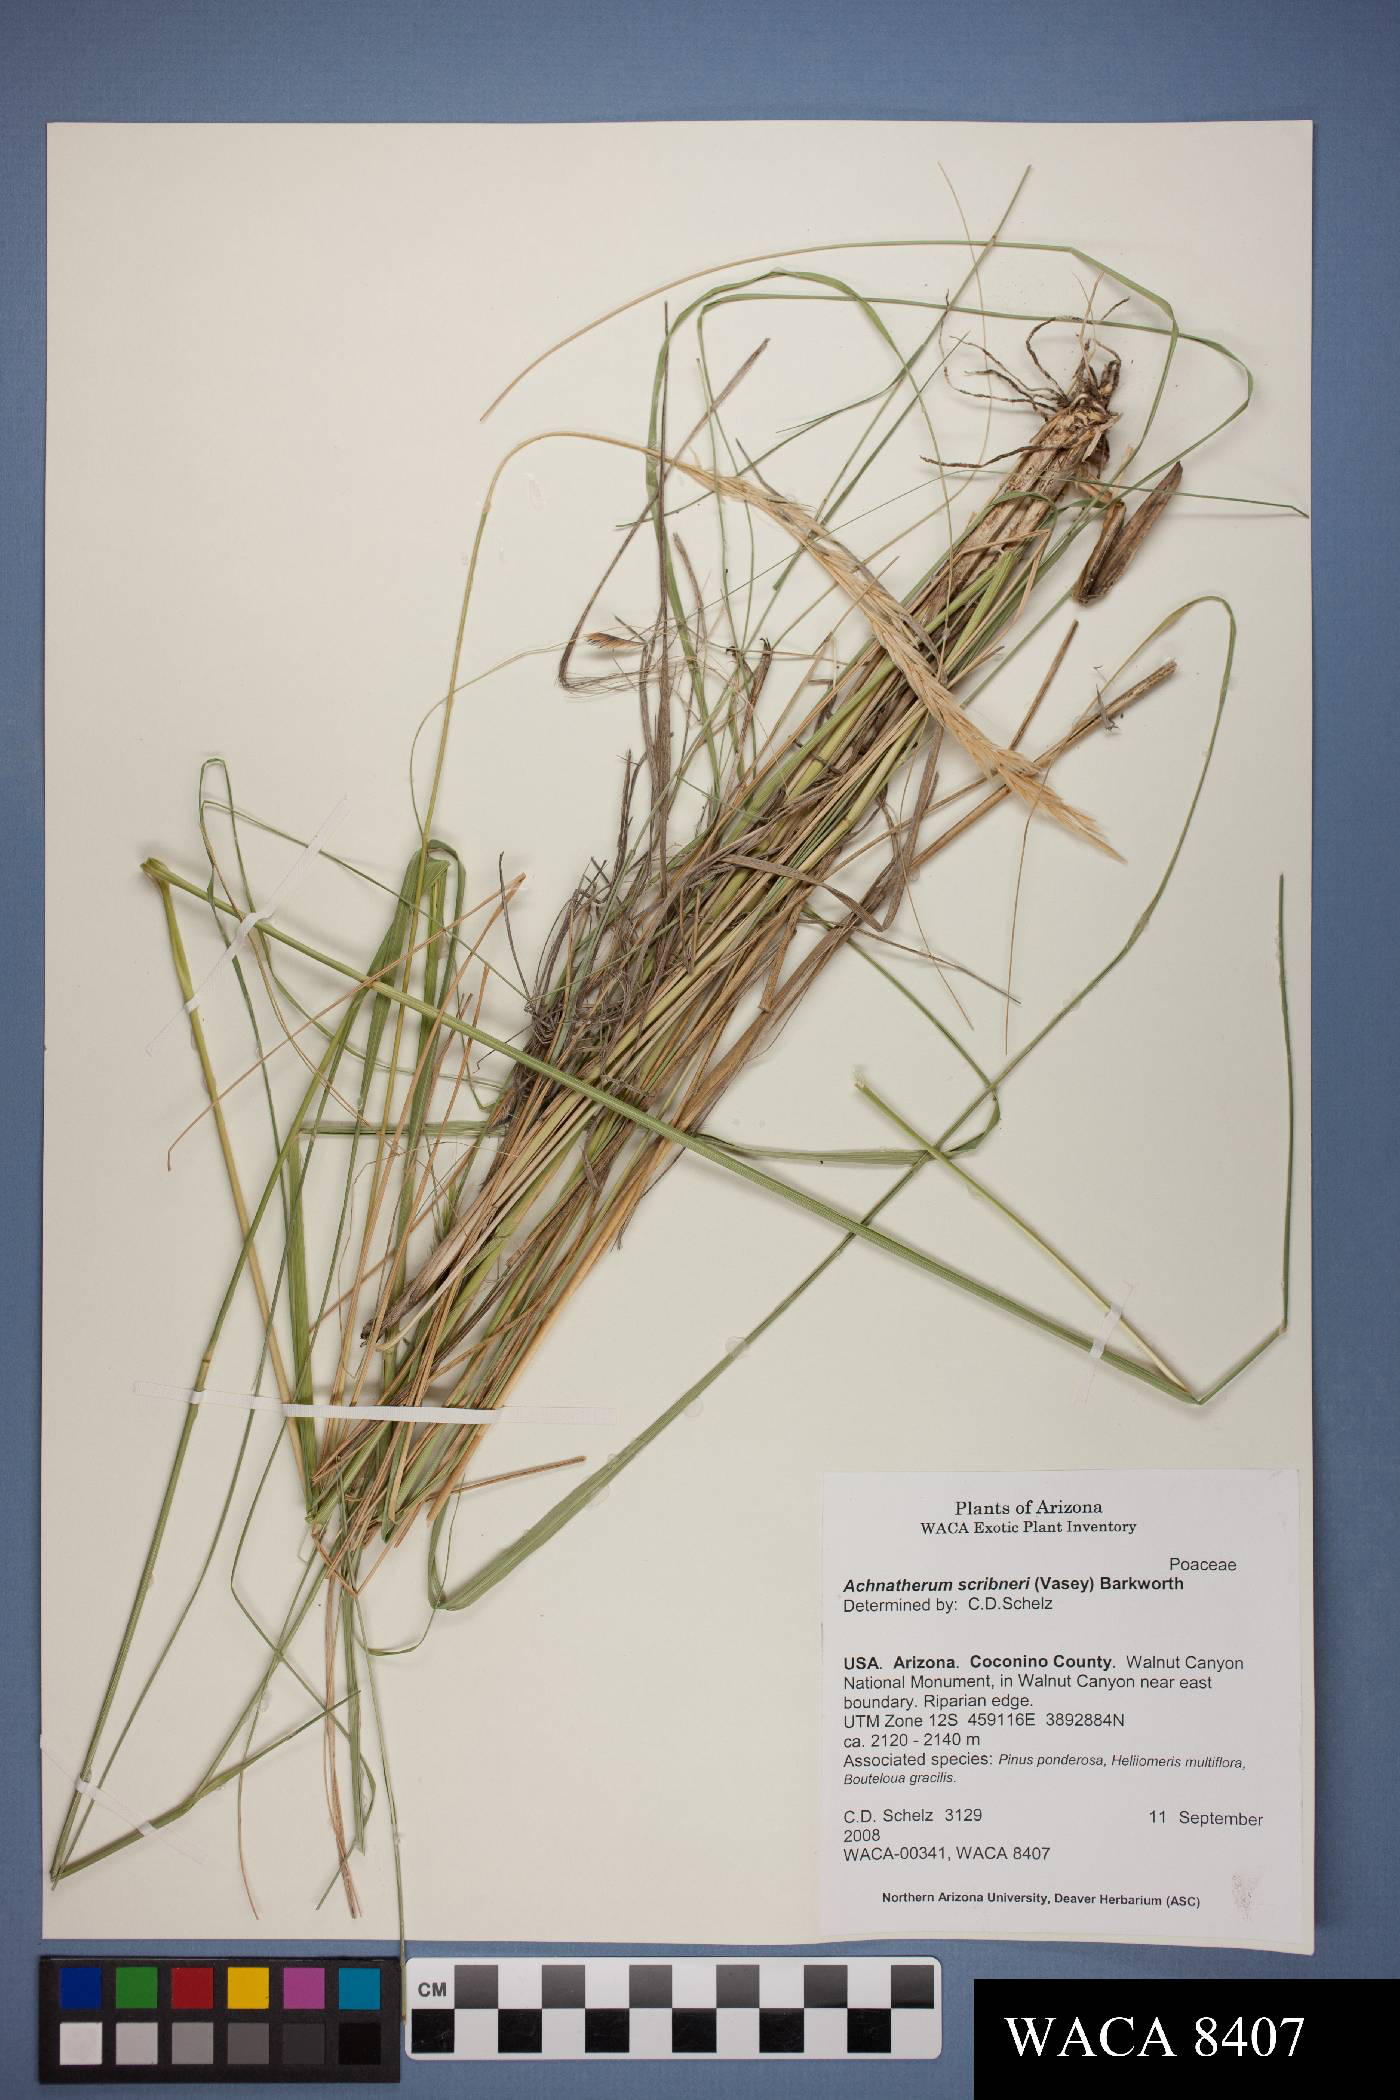 Herbarium specimen of a bunchgrass, leafy foliage